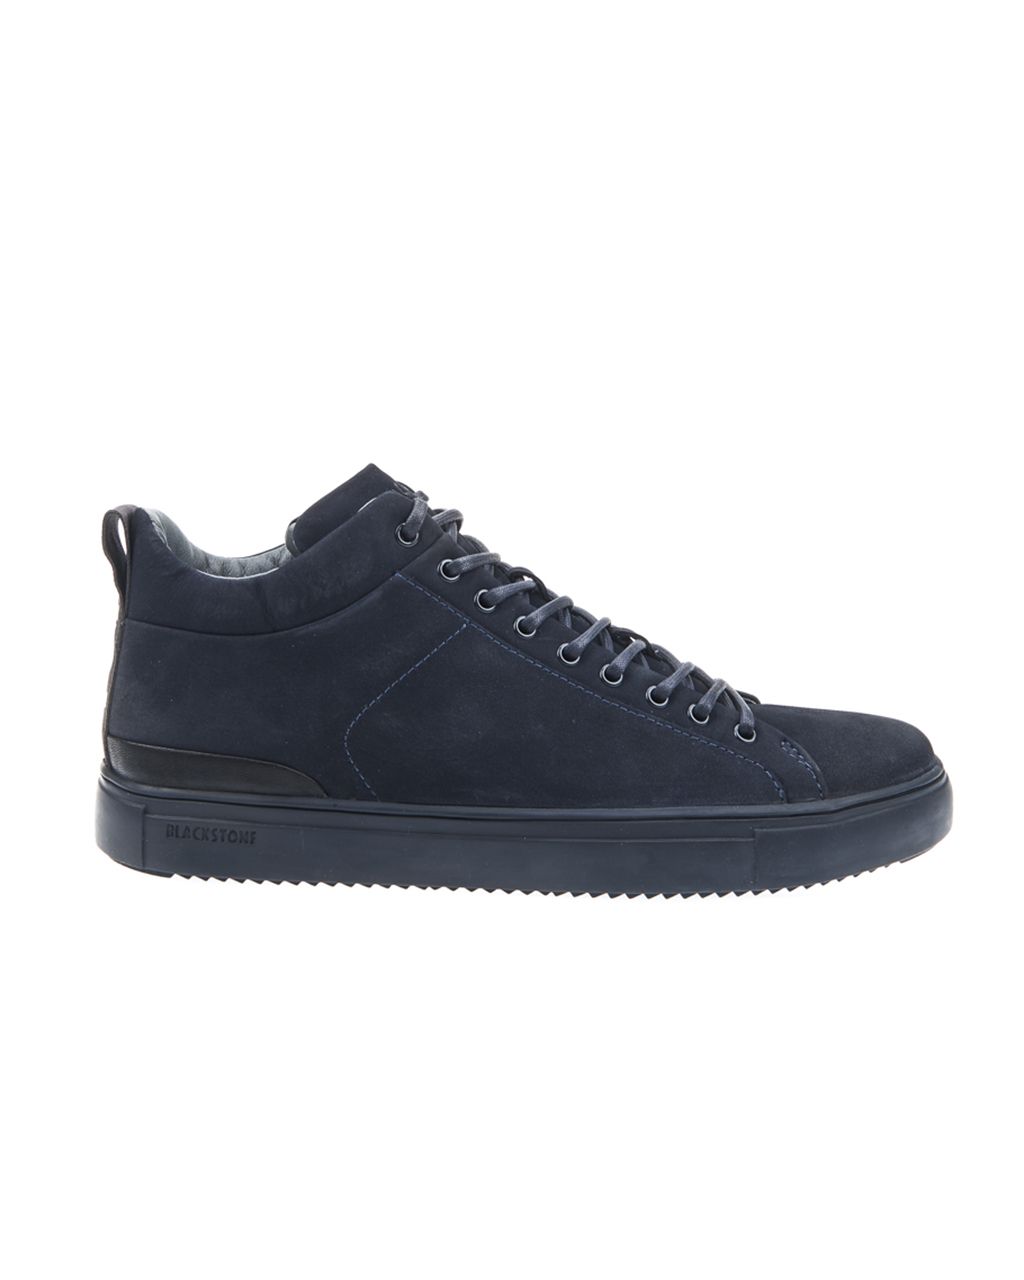 Blackstone SG19 Sneakers Donker blauw 076648-001-41